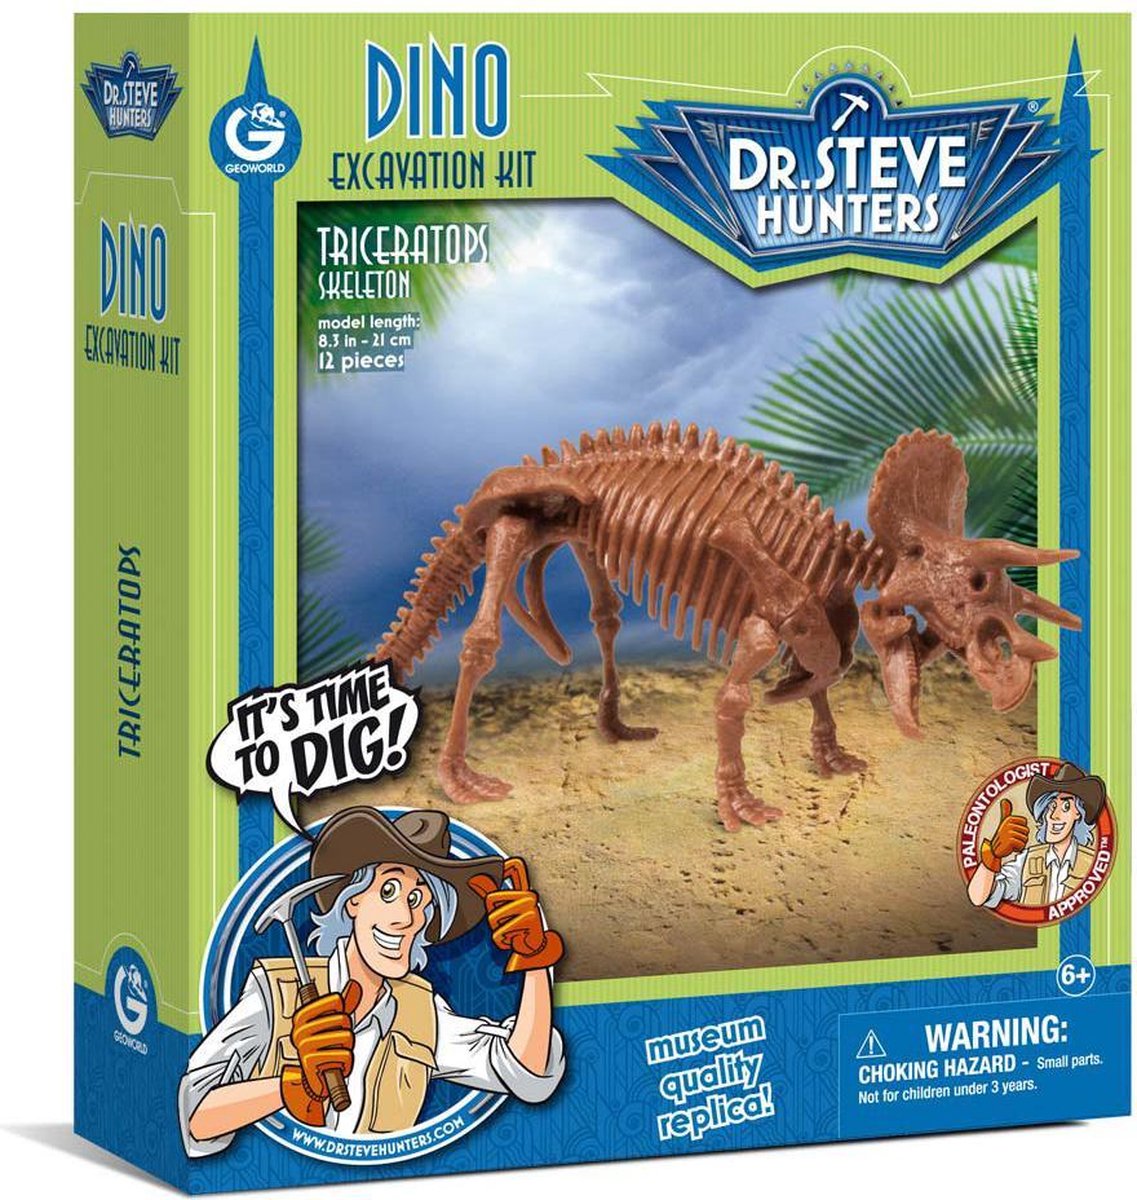 dr steve hunters dinosaur